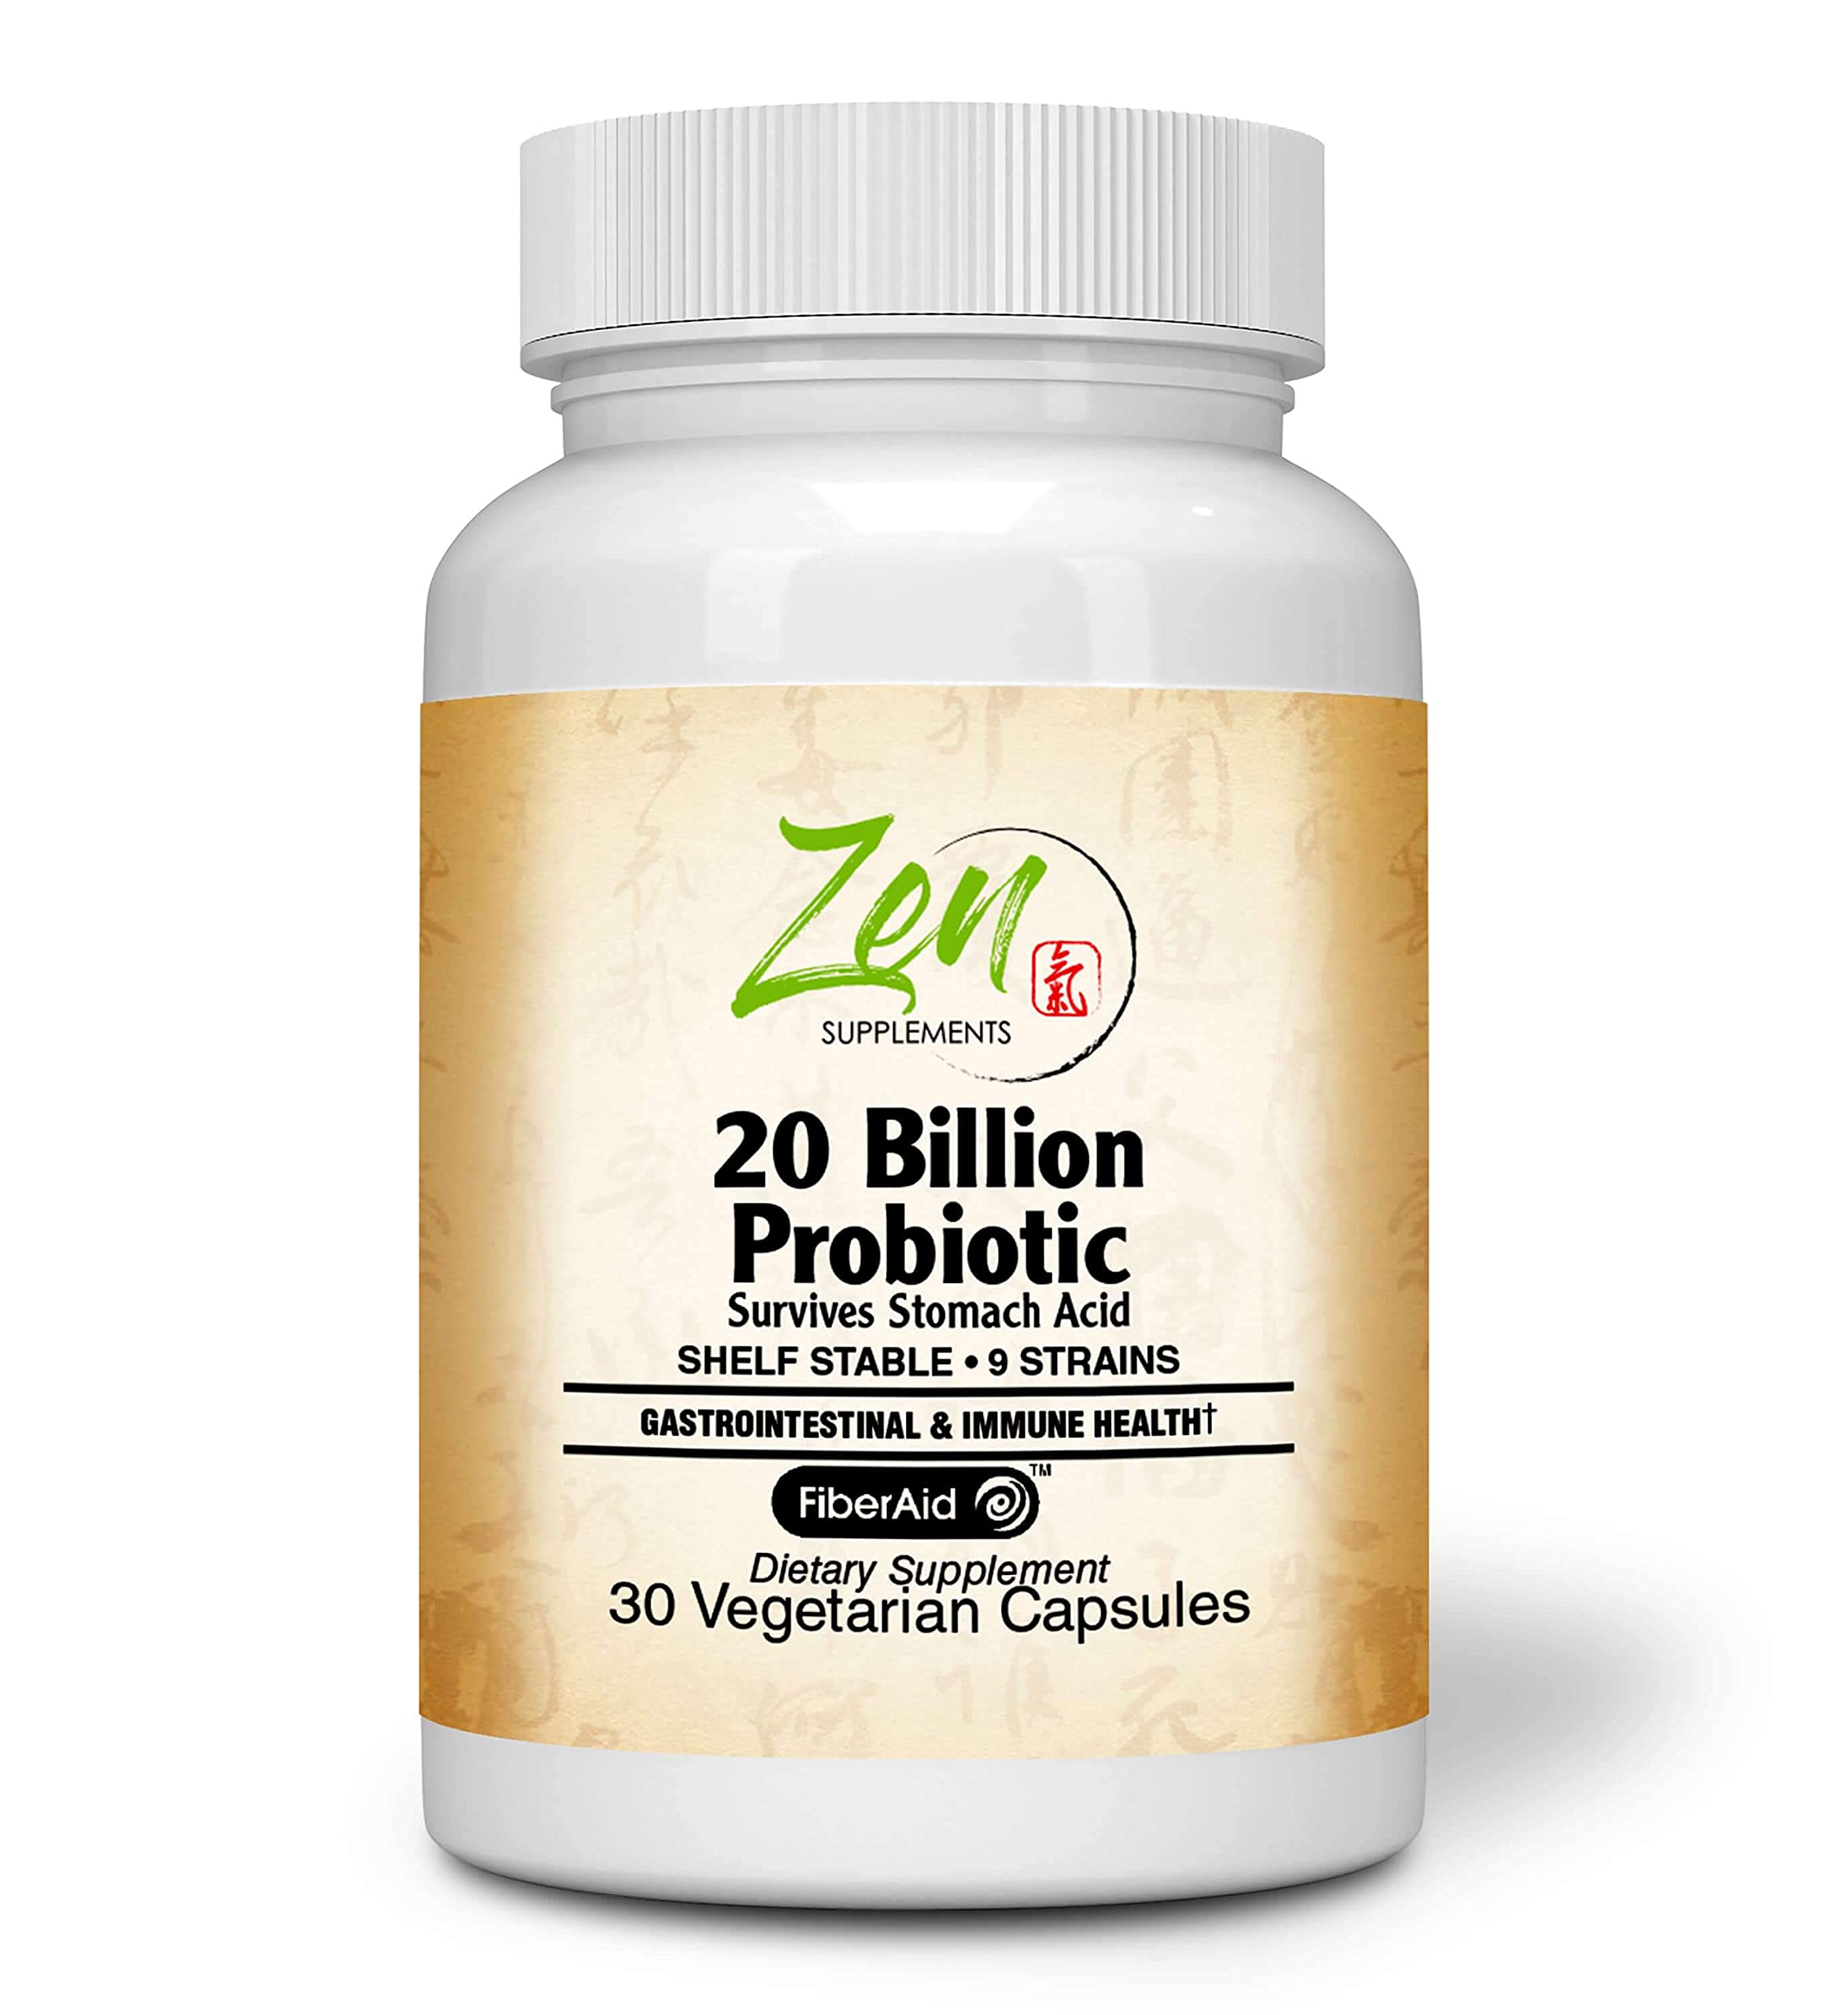 Zen Supplements - Multi-Probiotic 20 Billion CFU 9 Strain, 30-Vegcaps -Sustained Release Technology, Resist Stomach Acid, Shelf Stable - Support for Healthy Digestion & Intestinal Ecology Favorable Intestinal Flora